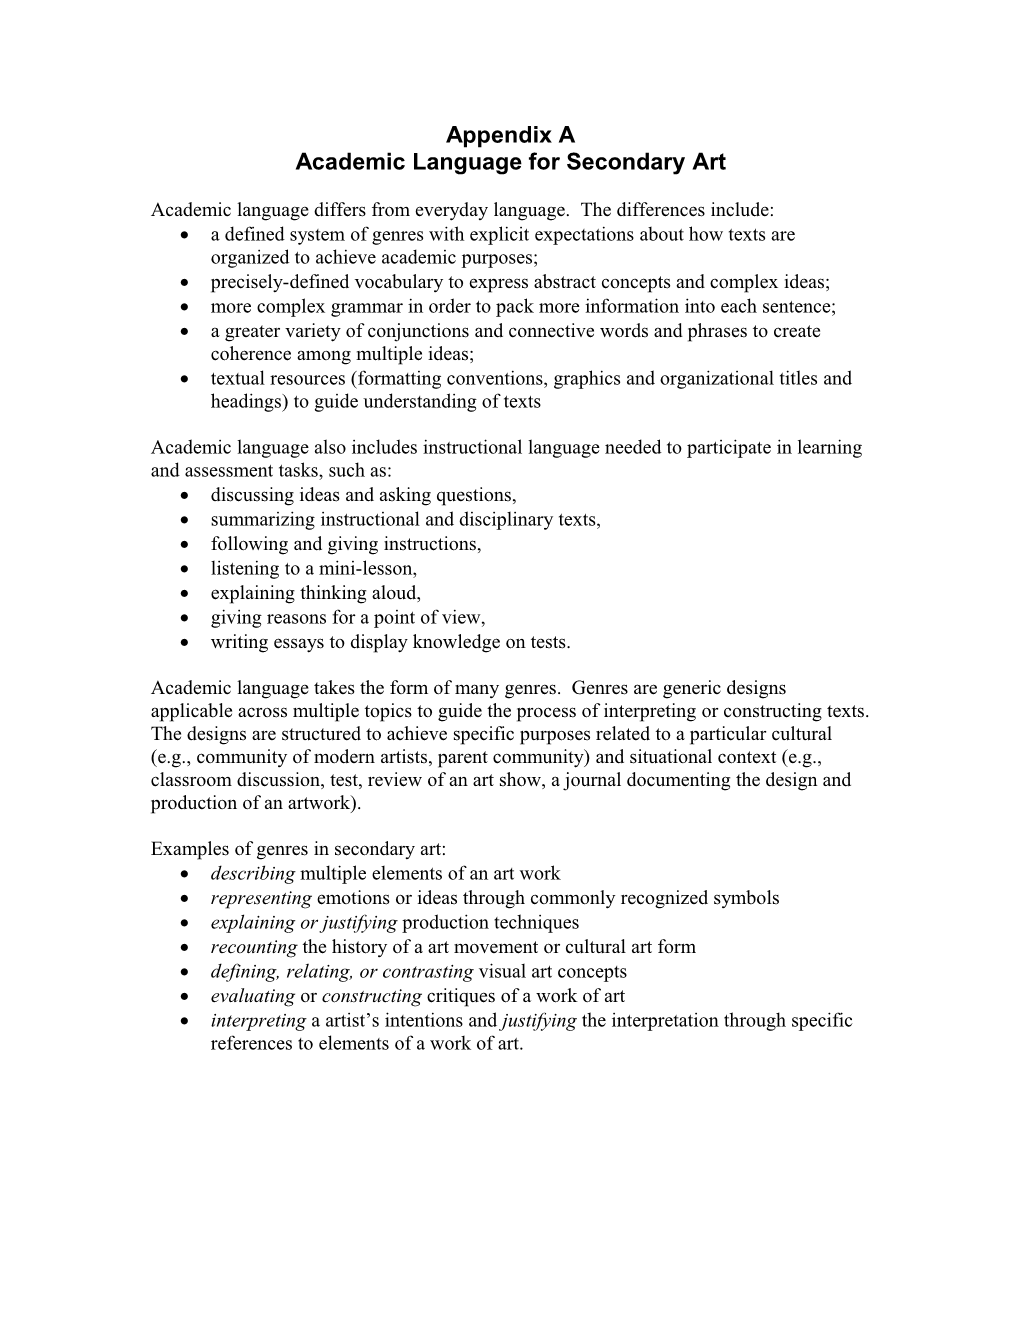 Academic Language for Secondary Art